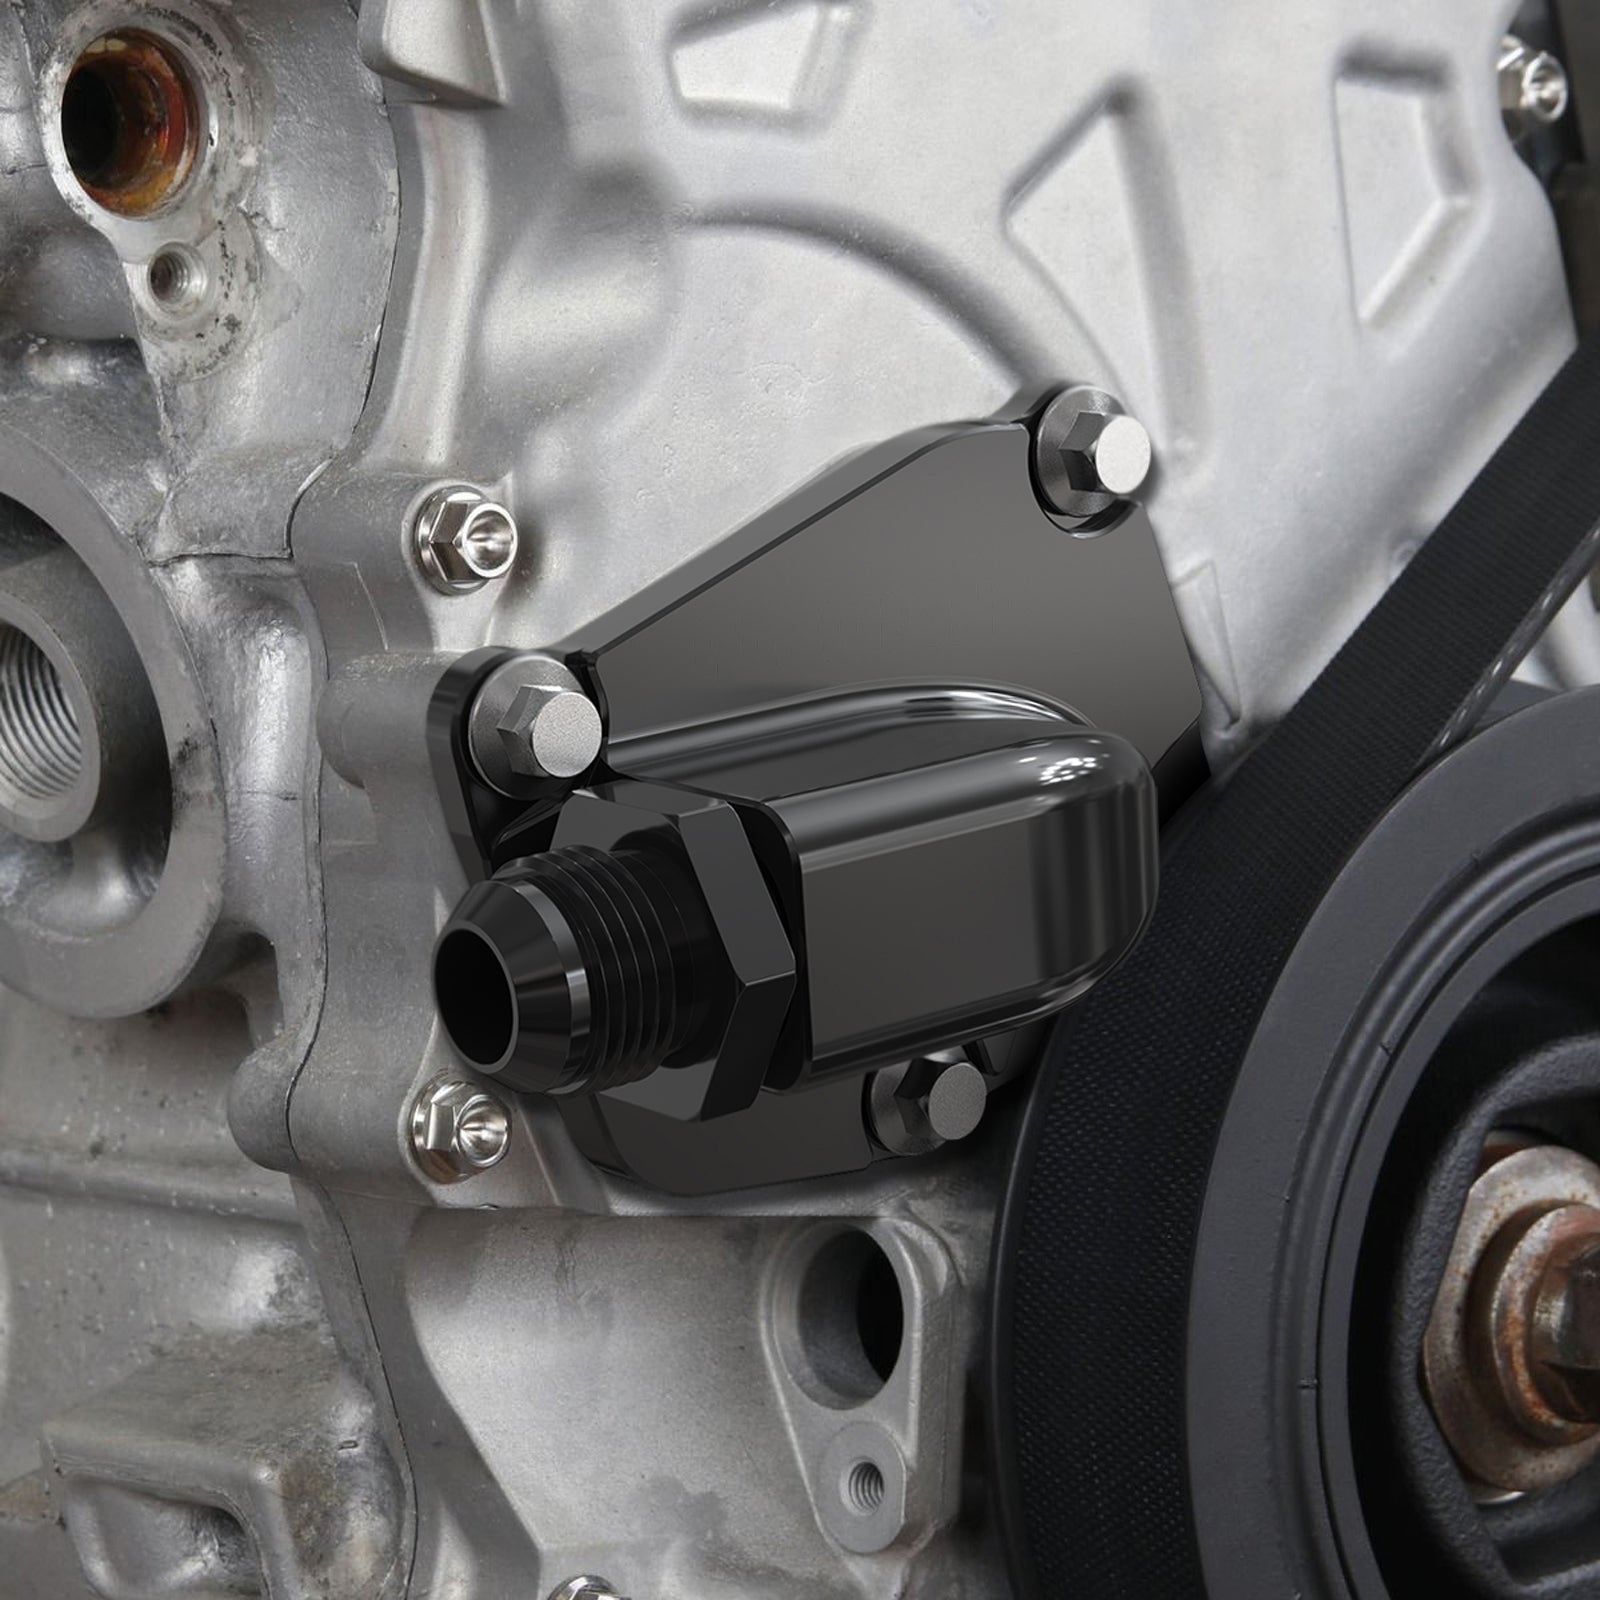 BEVINSEE Timing Chain Tensioner Oil Return Plate Cover For Honda K20 K24 Engines